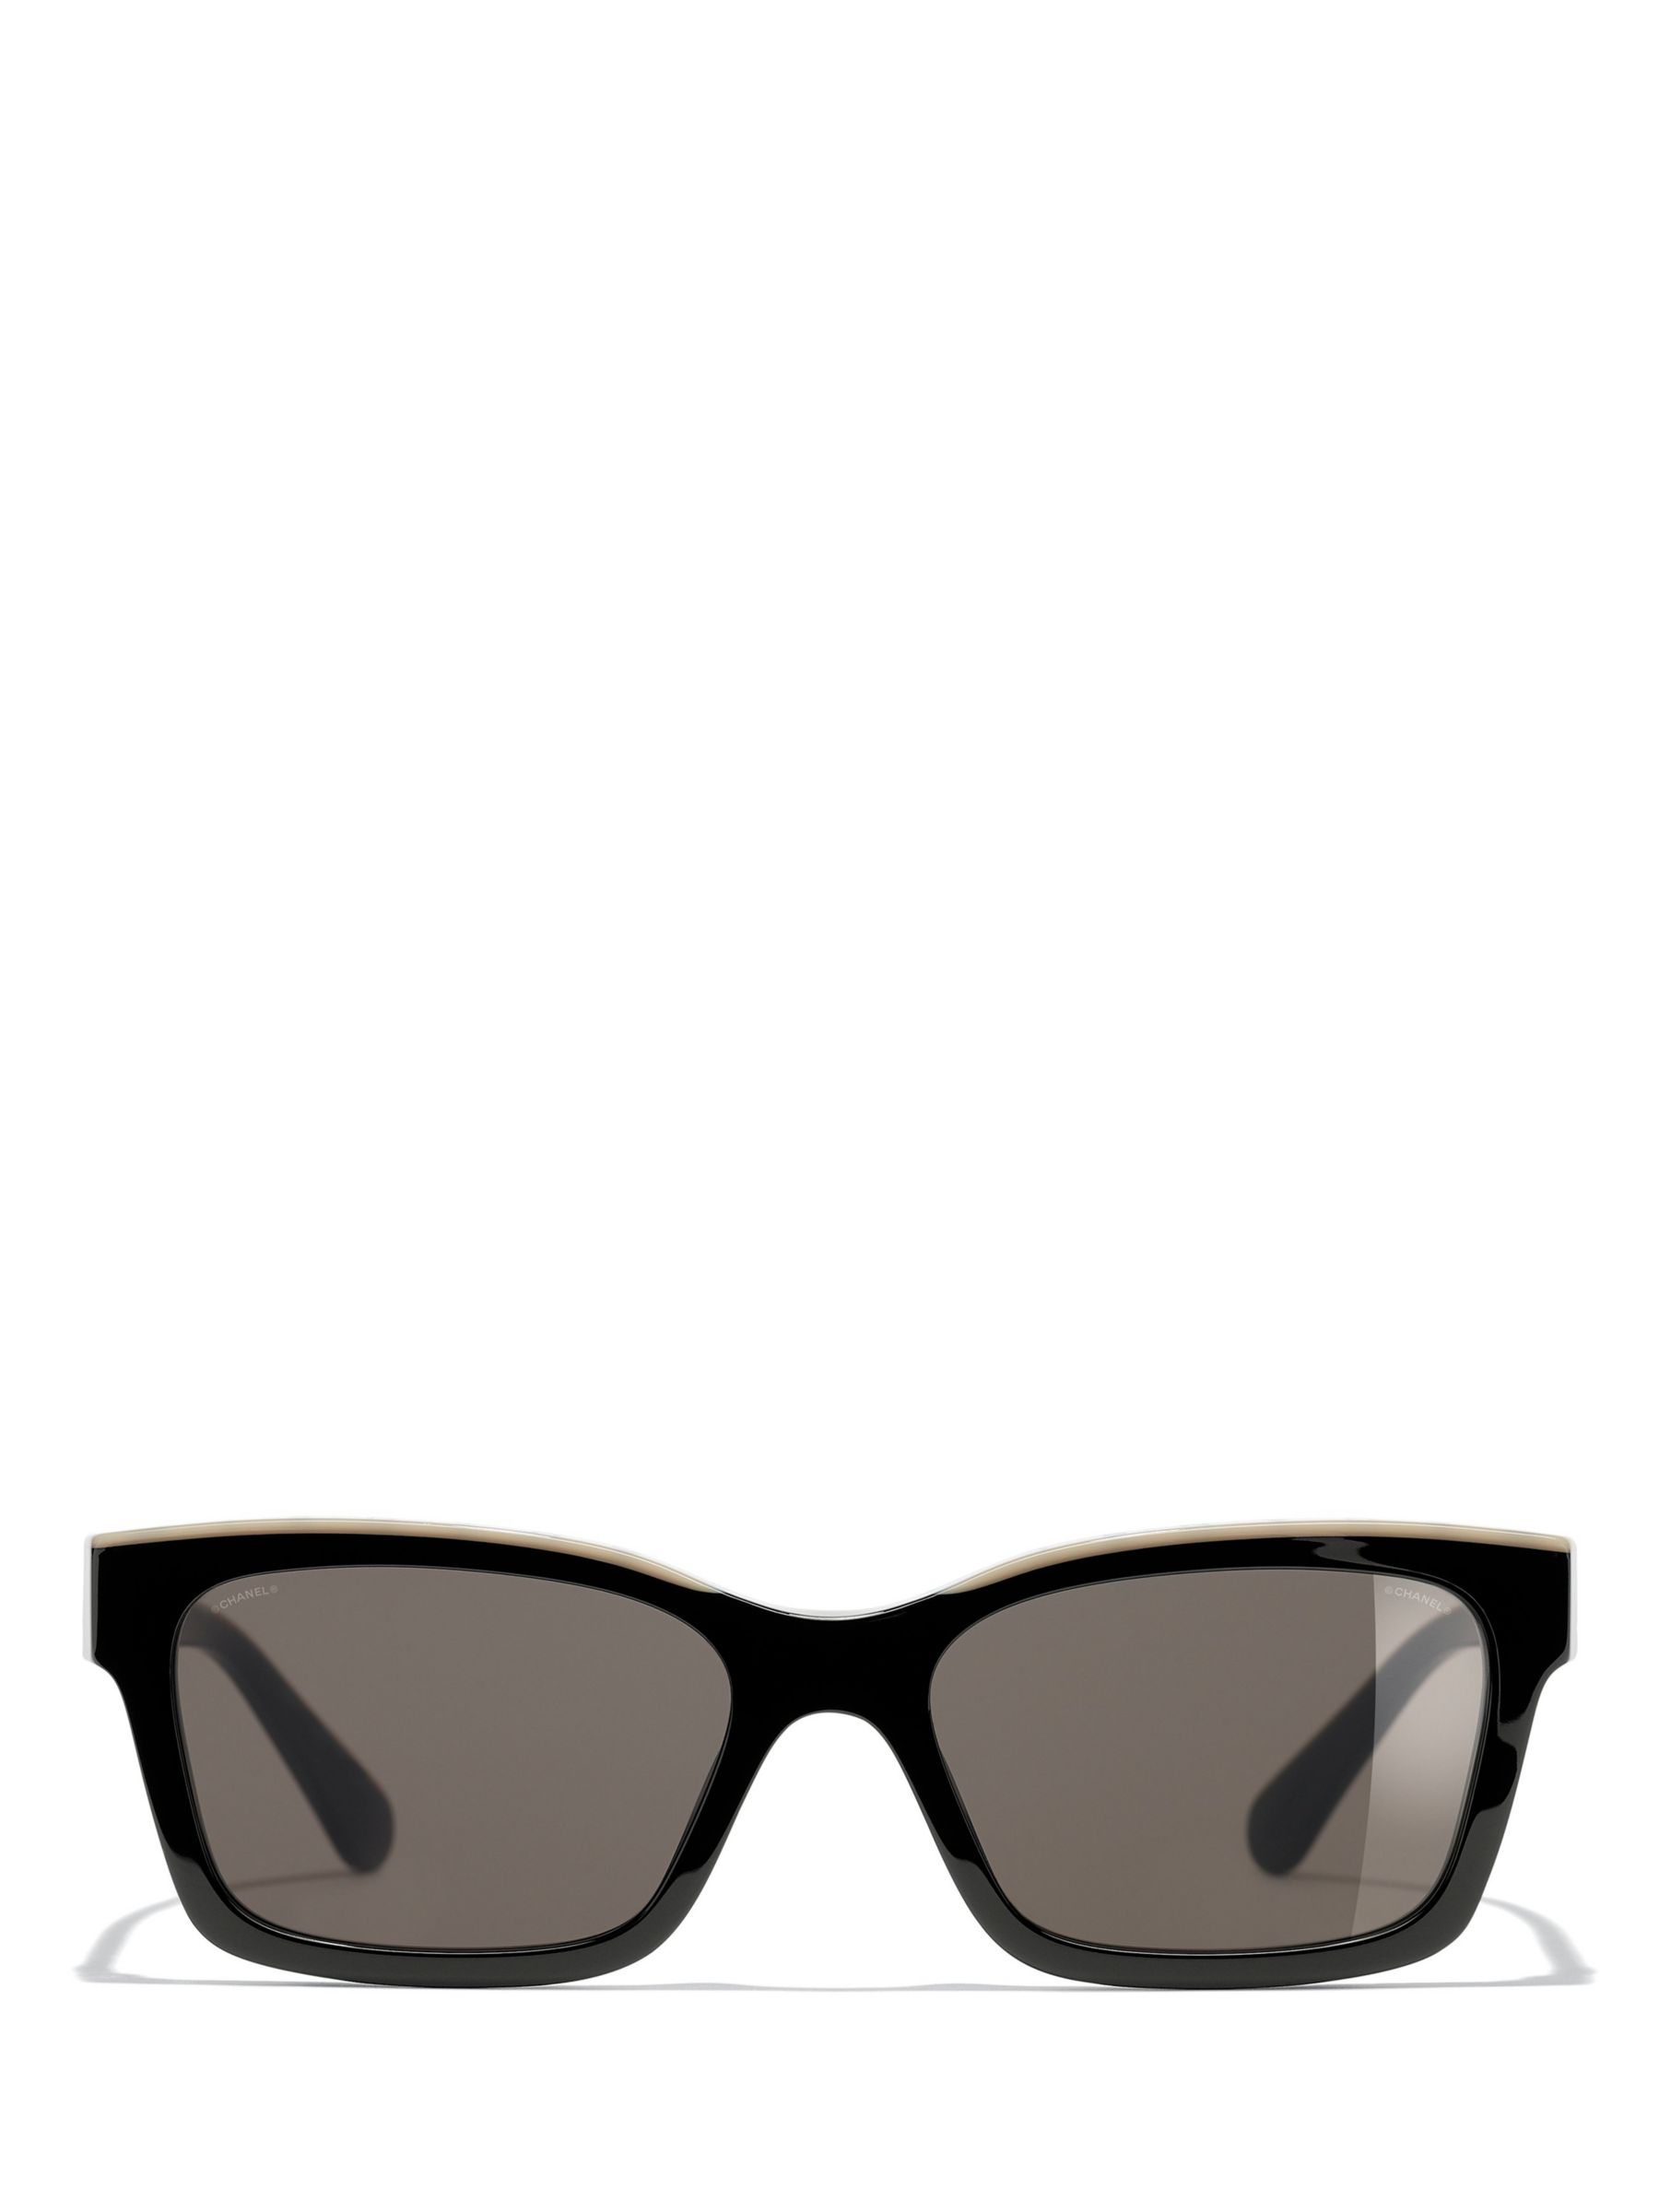 CHANEL Square Sunglasses CH5417 Black/Beige at John Lewis & Partners